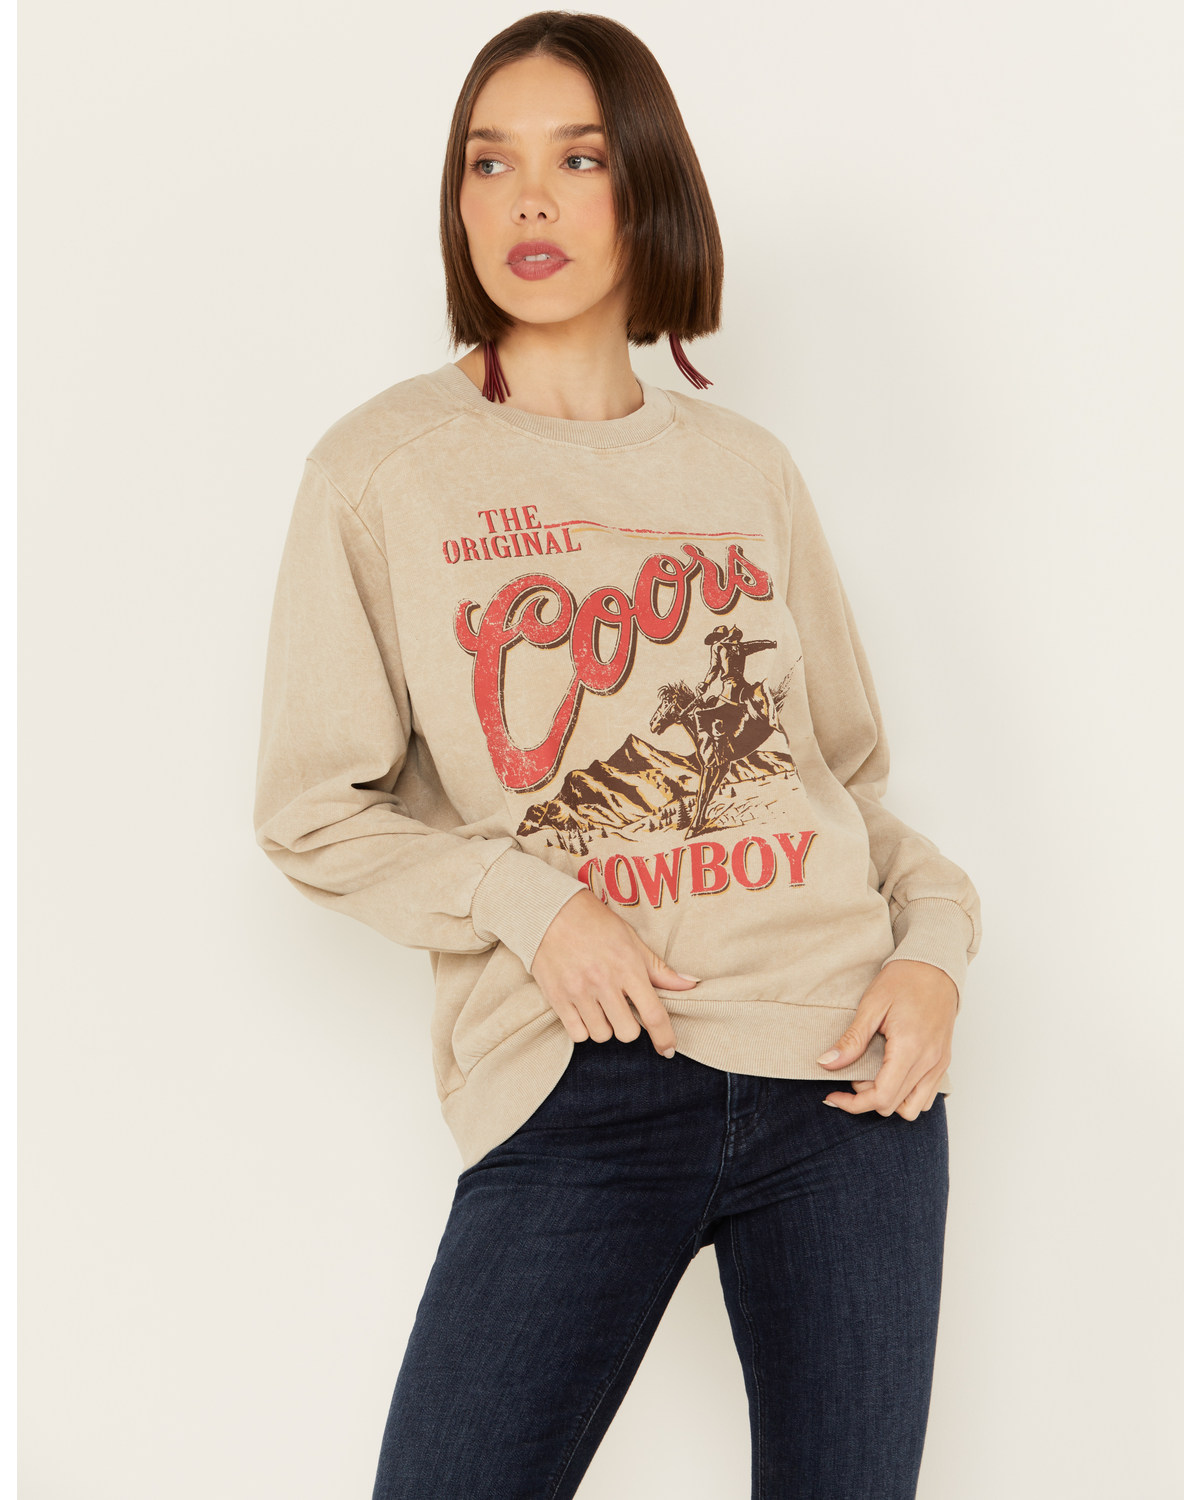 Changes Women's OG Coors Cowboy Graphic Sweatshirt